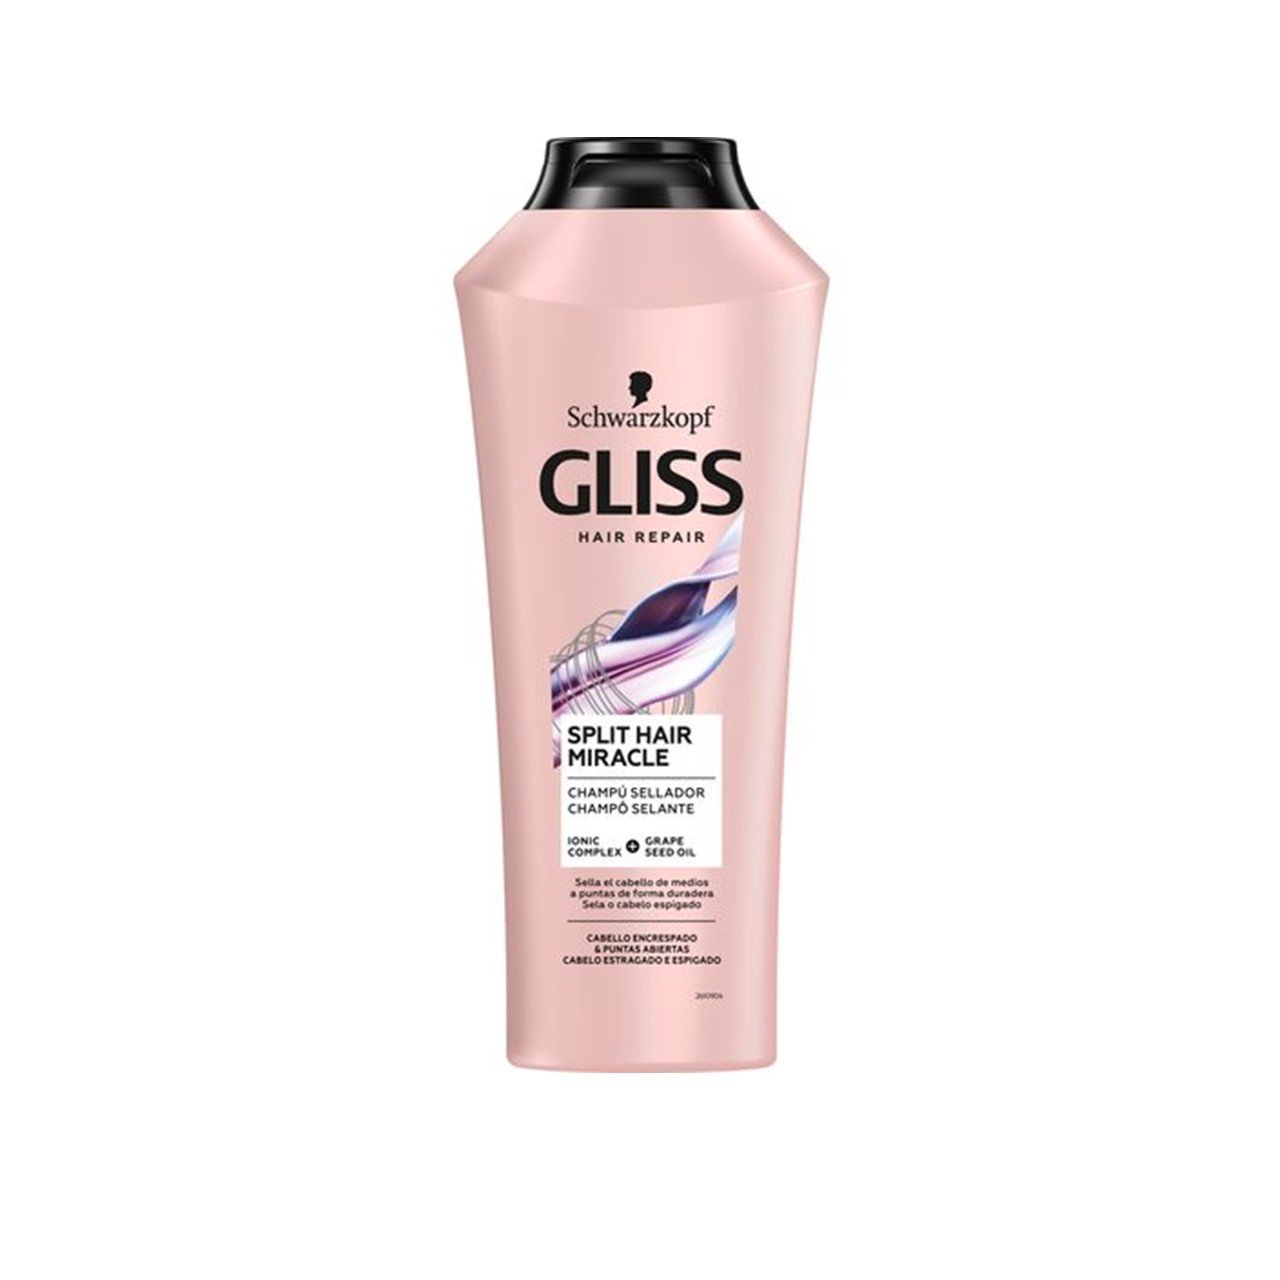 Schwarzkopf Gliss Split Ends Hair Miracle Shampoo 370ml (12.51fl oz)